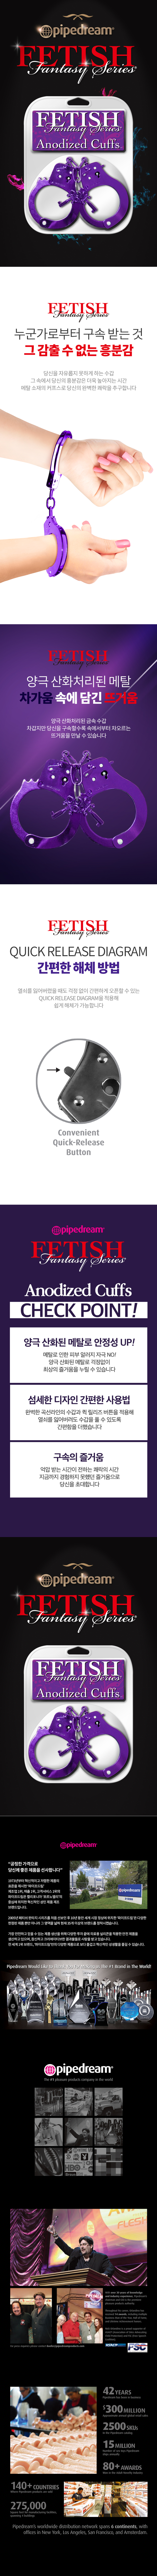 Fetish_Fantasy_Series_Anodized_Cuffs_purple.jpg